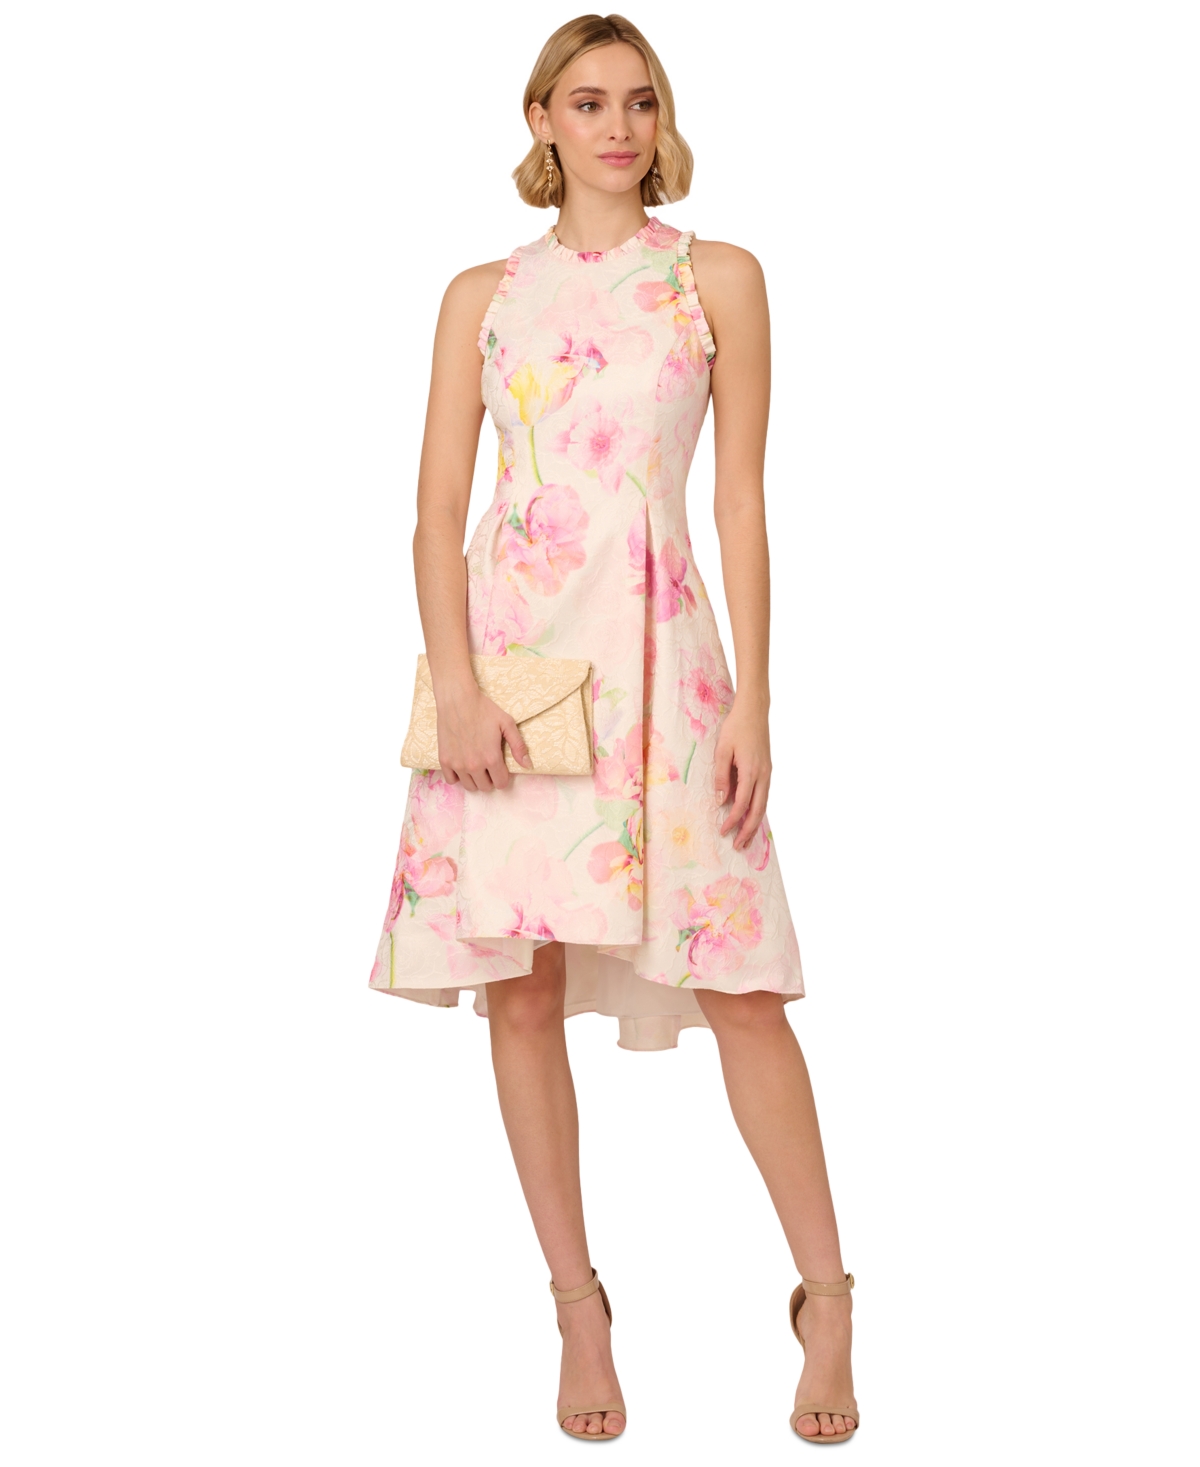 Women's Floral Jacquard Ruffle-Trim Dress - Pink Multi